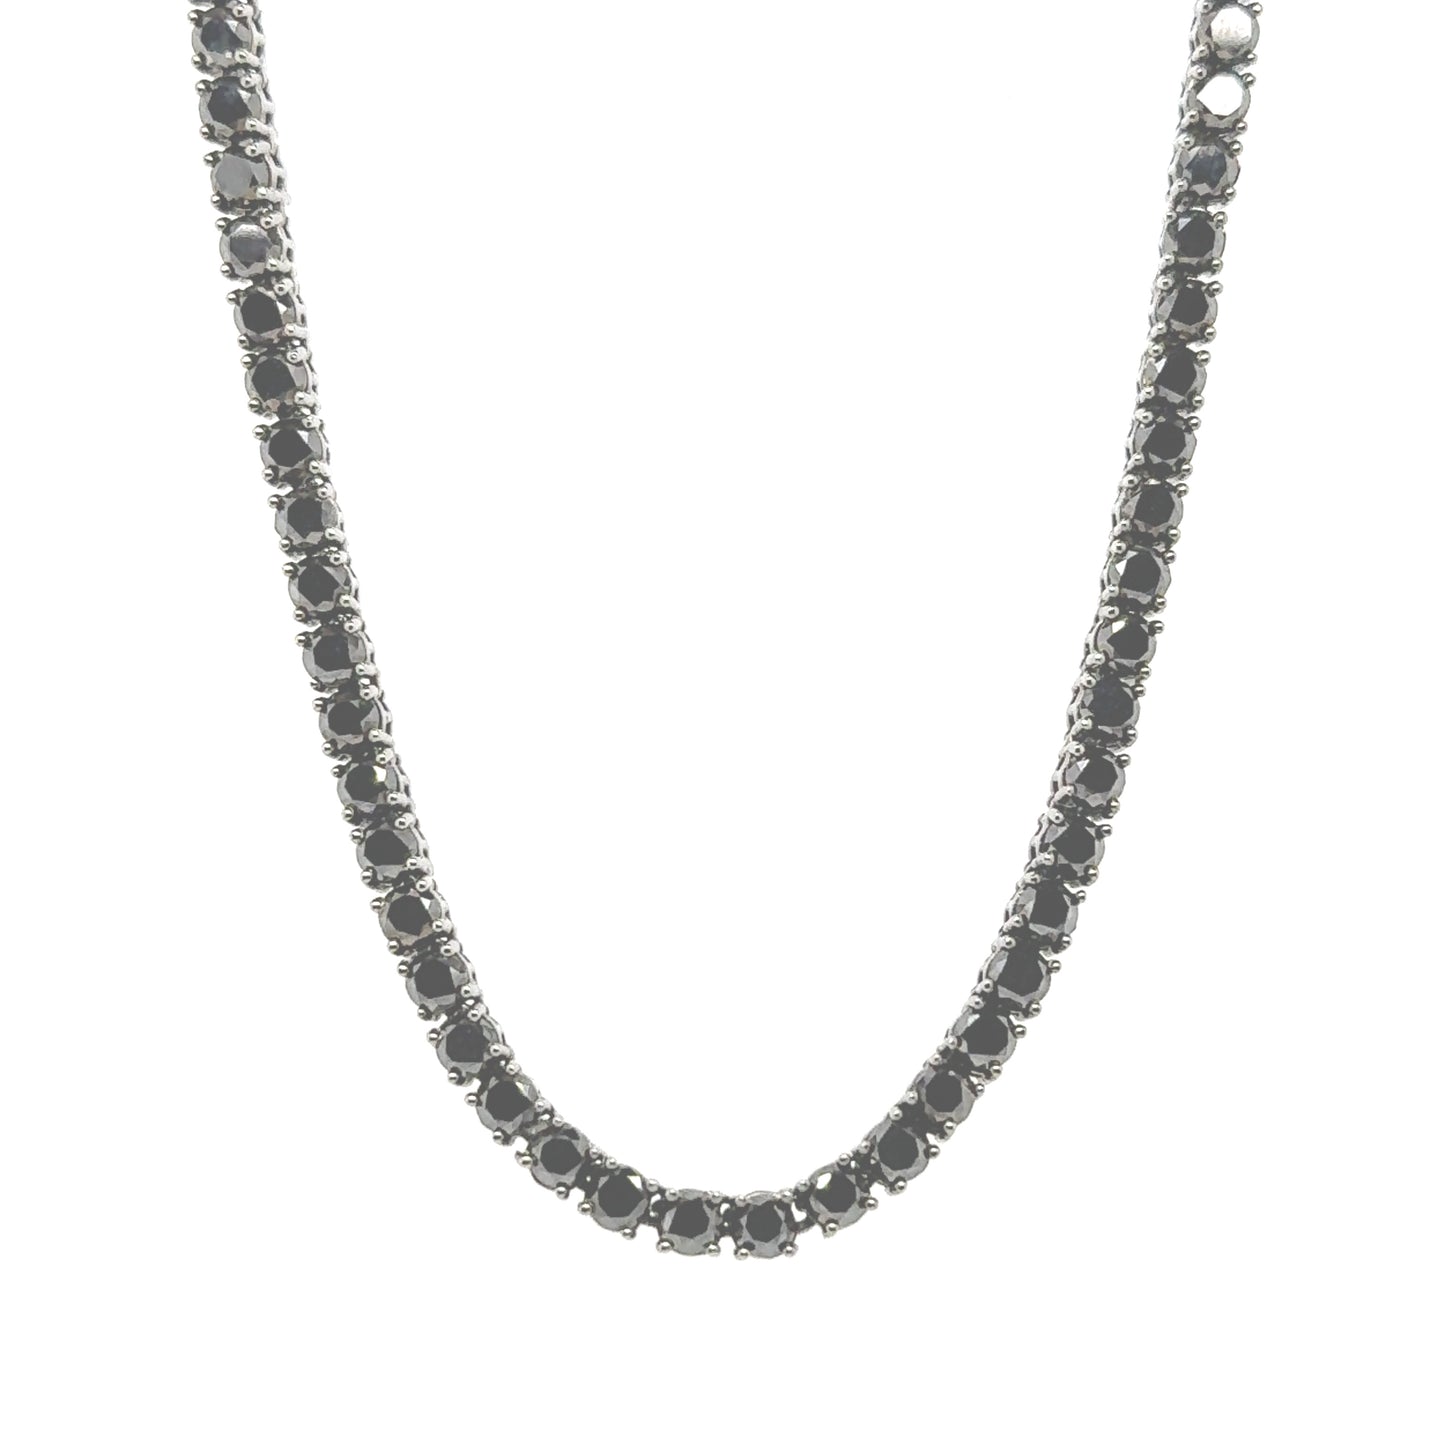 14K black gold tennis necklace featuring 21.28 carats of black diamonds.